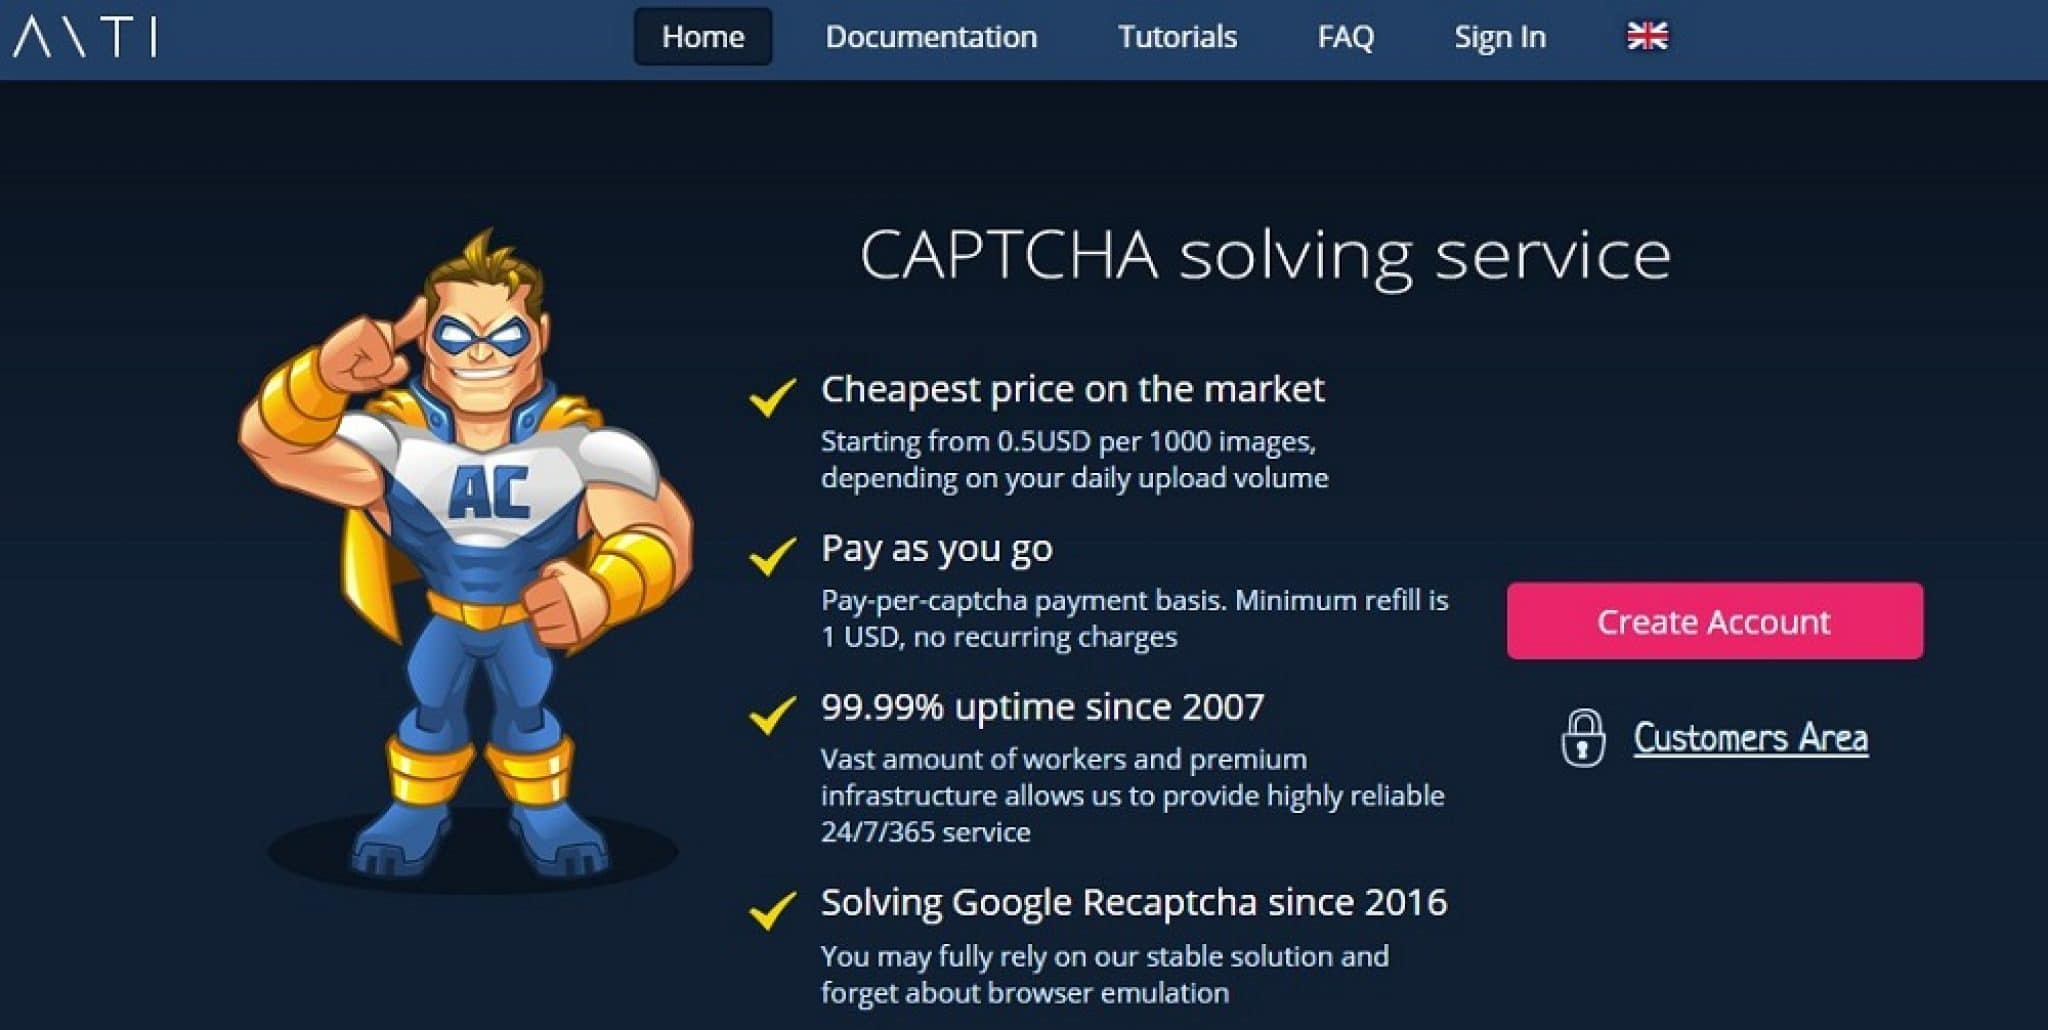 solve captcha with flash image